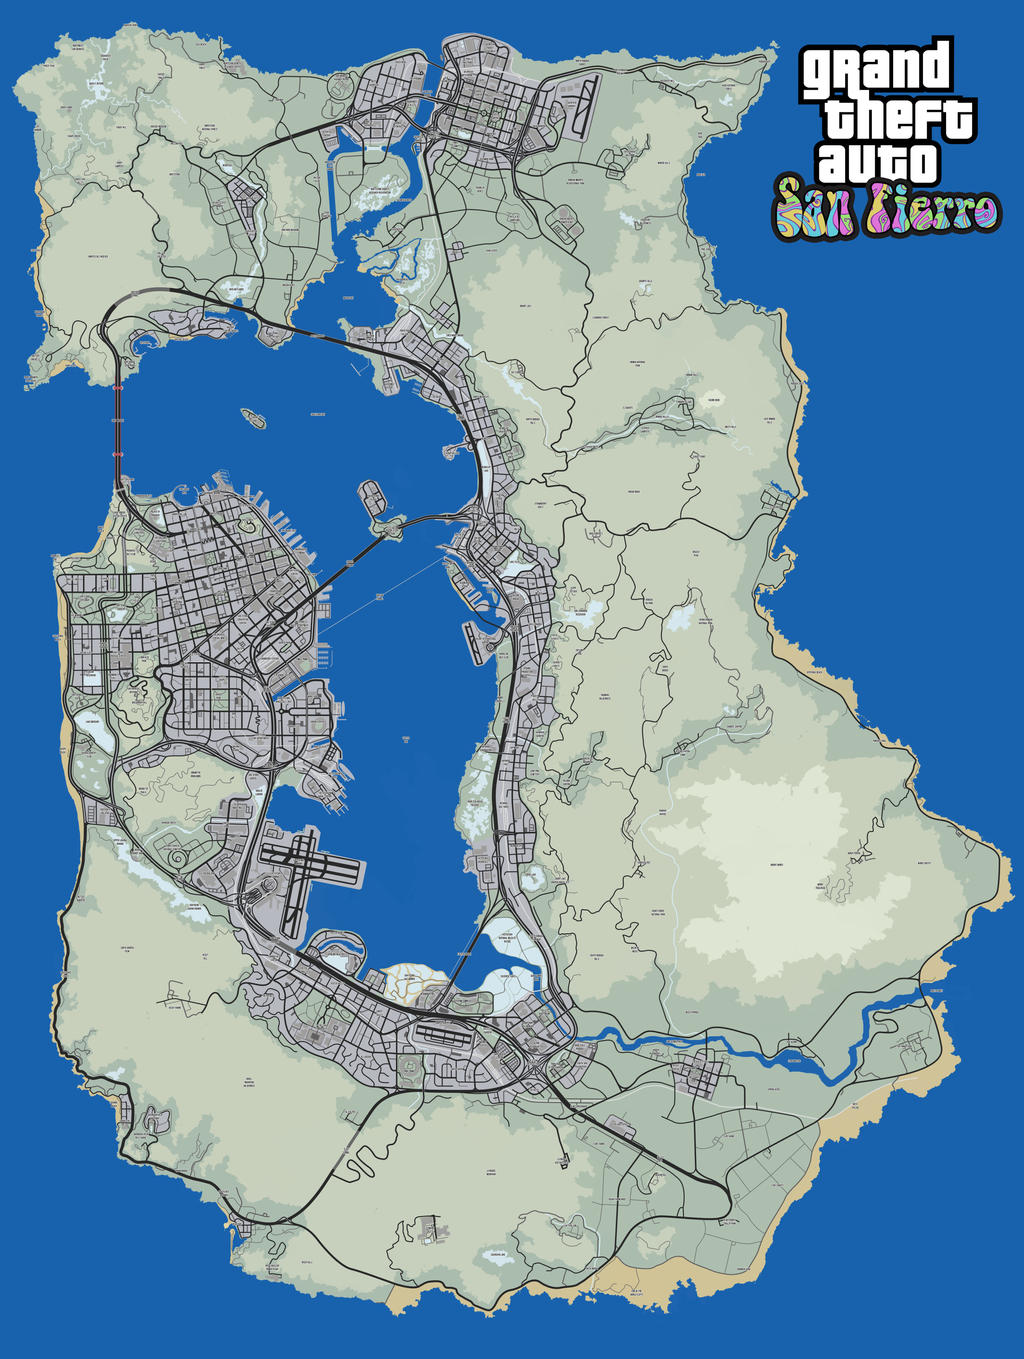 GTA 6. Vice City - San Andreas Comparison by avatar-sd on DeviantArt